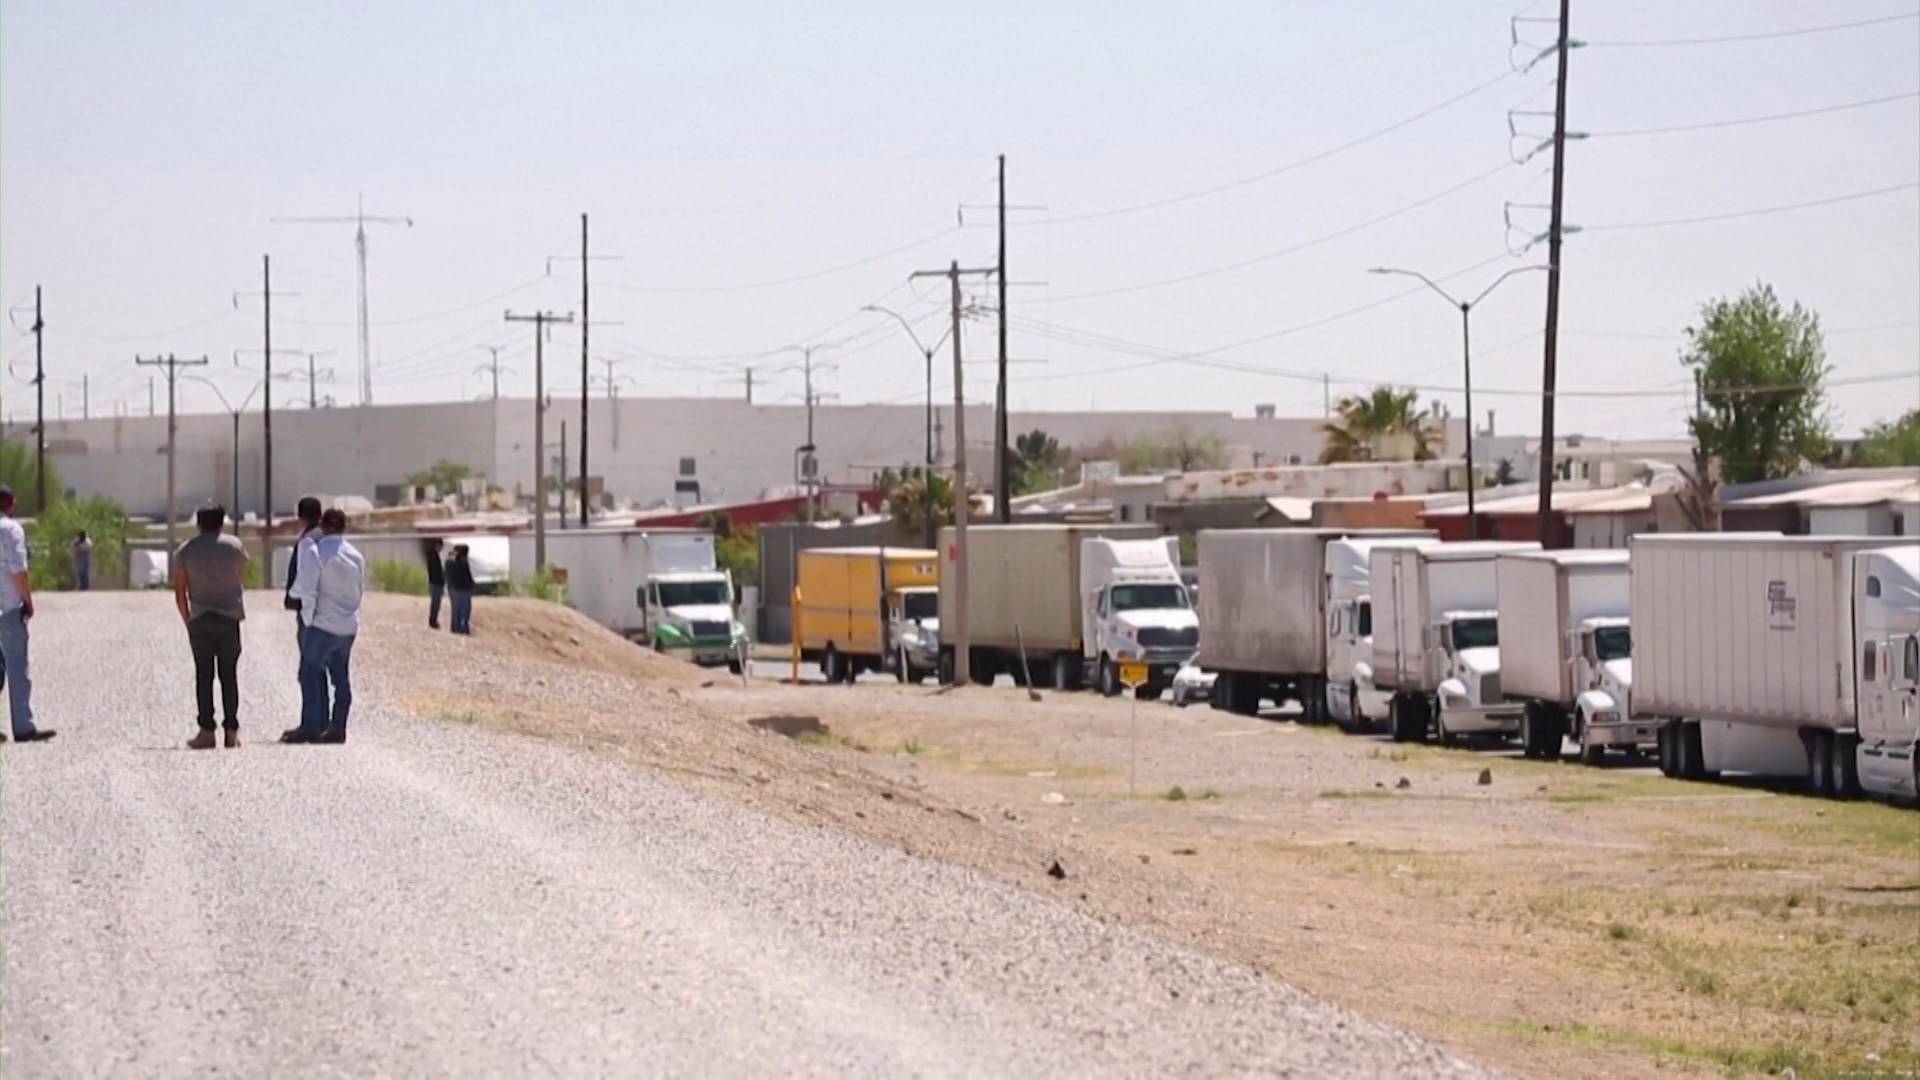 Texas Republican Governor Reverses Plans to Check Vehicles Crossing the Texas-Mexico Border